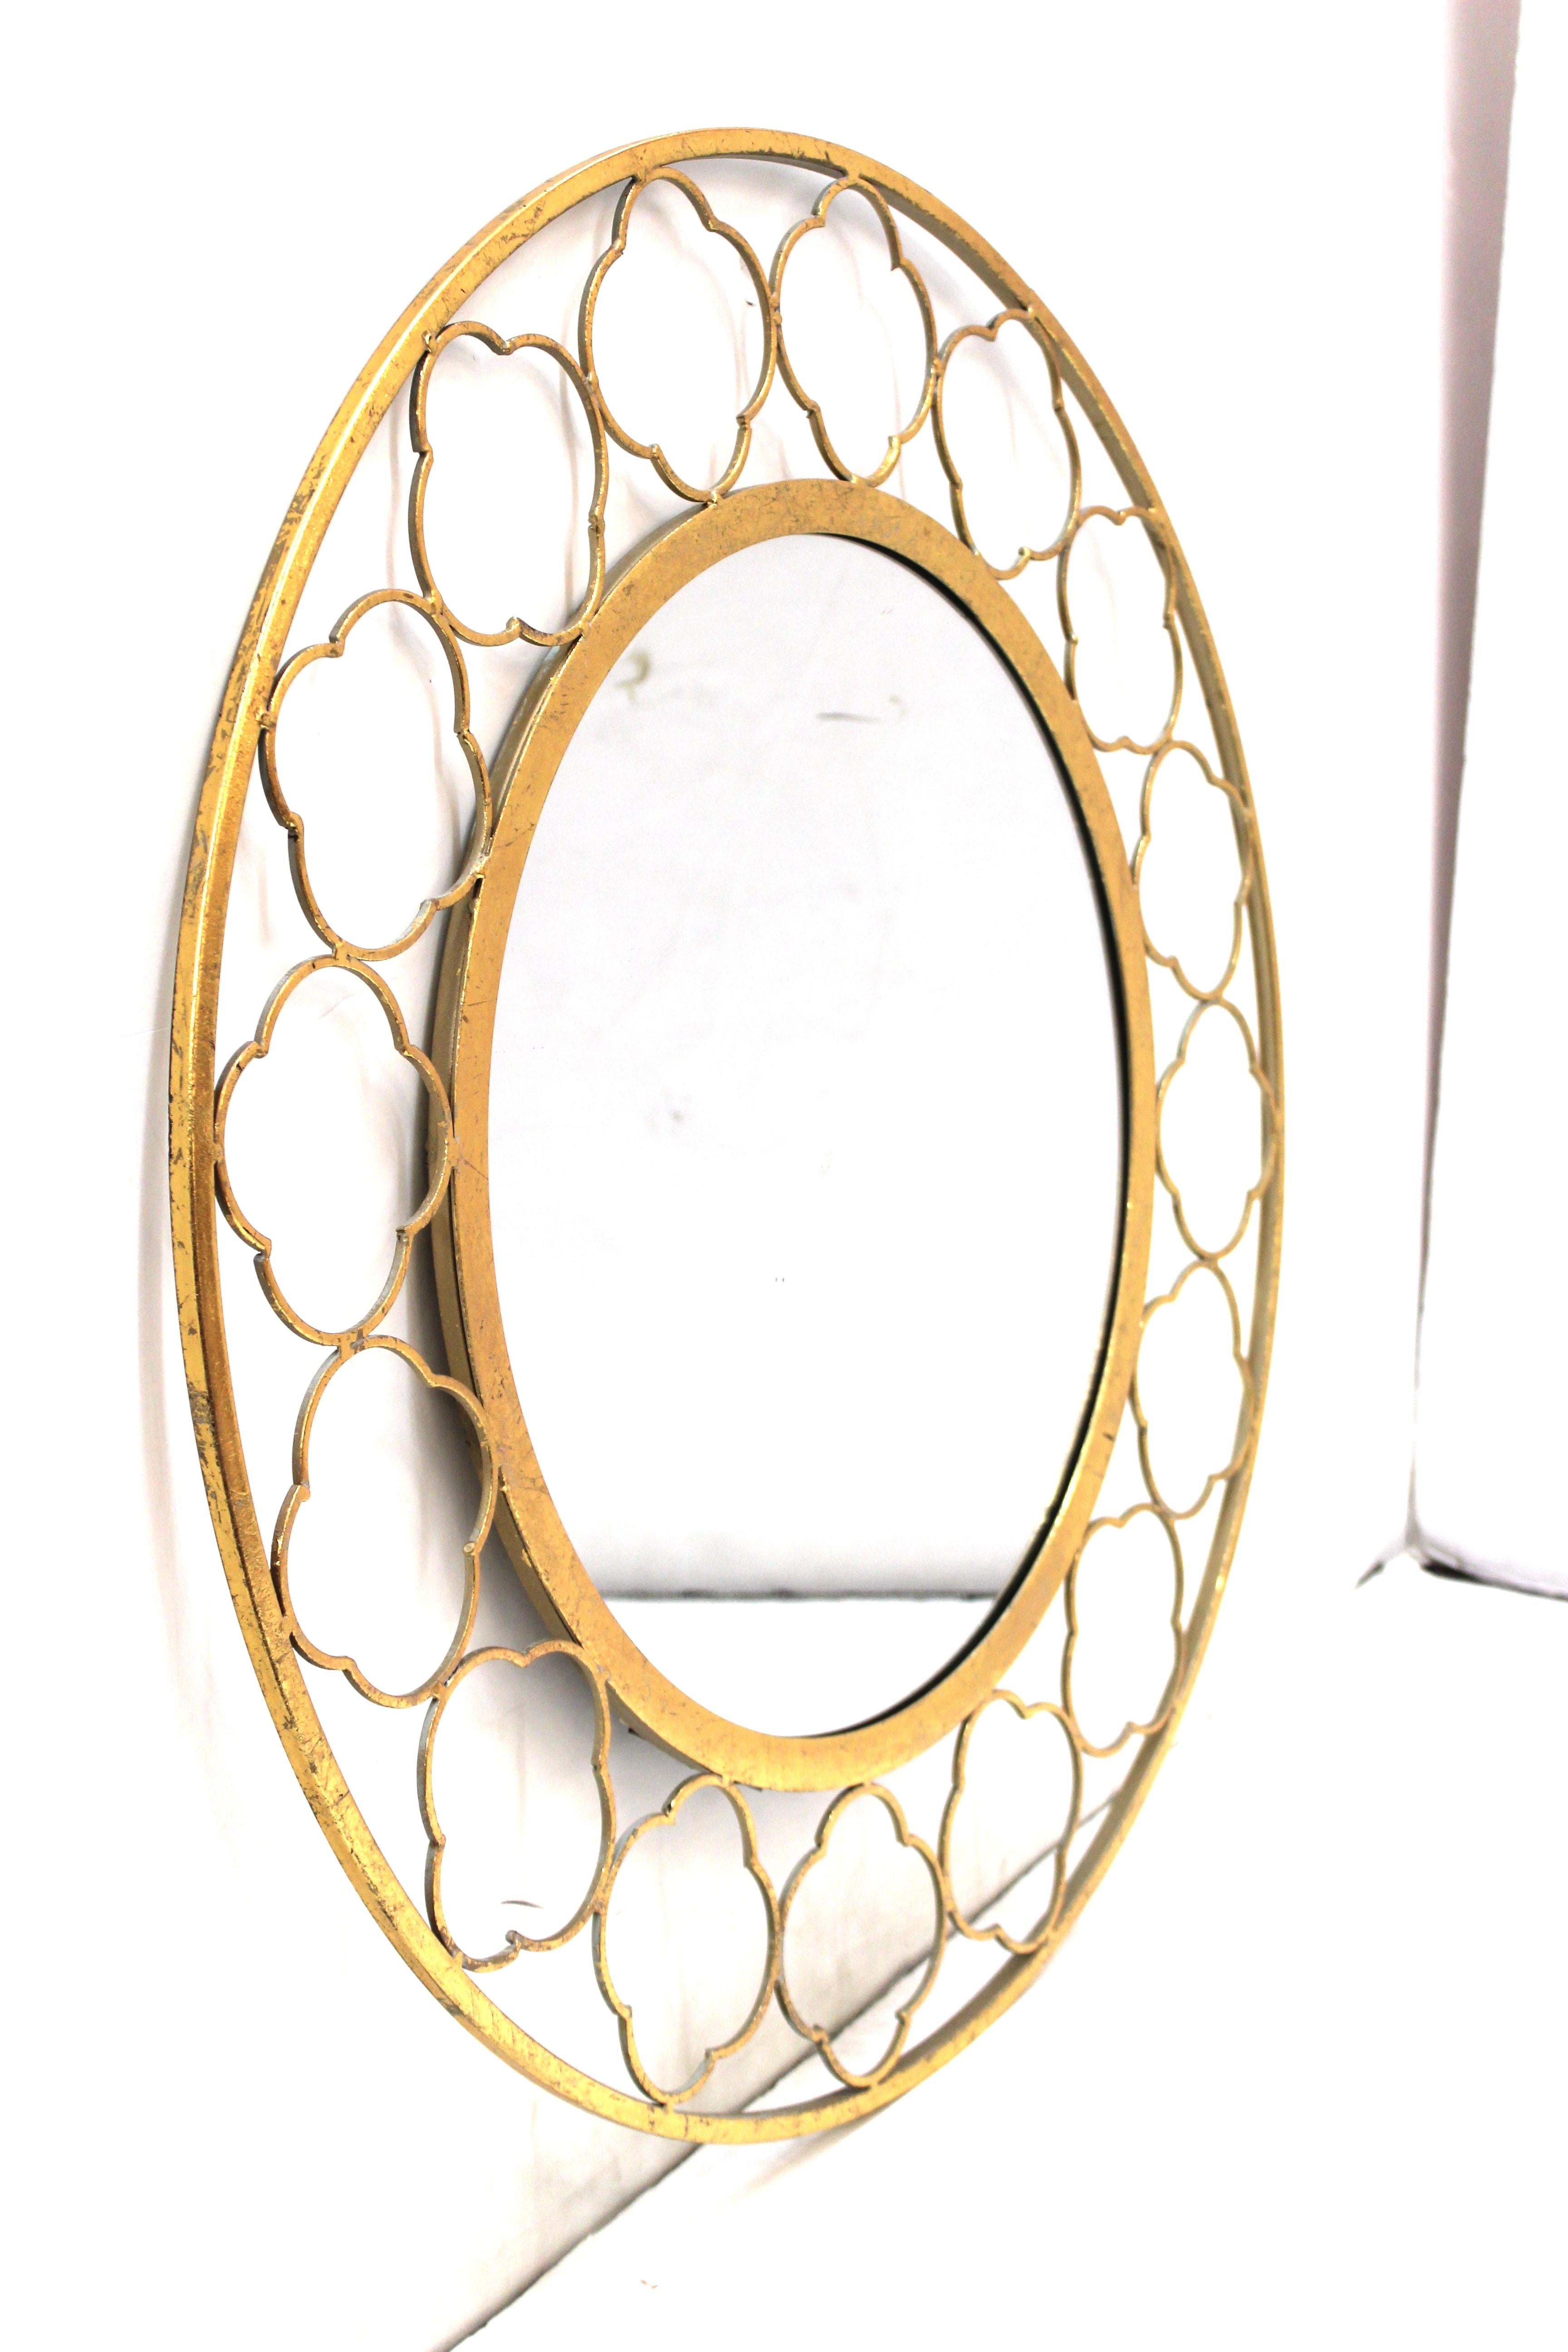 Mid-Century Modern style round gilt metal mirror with decorative quatrefoil border motif. The mirror is in good vintage condition.